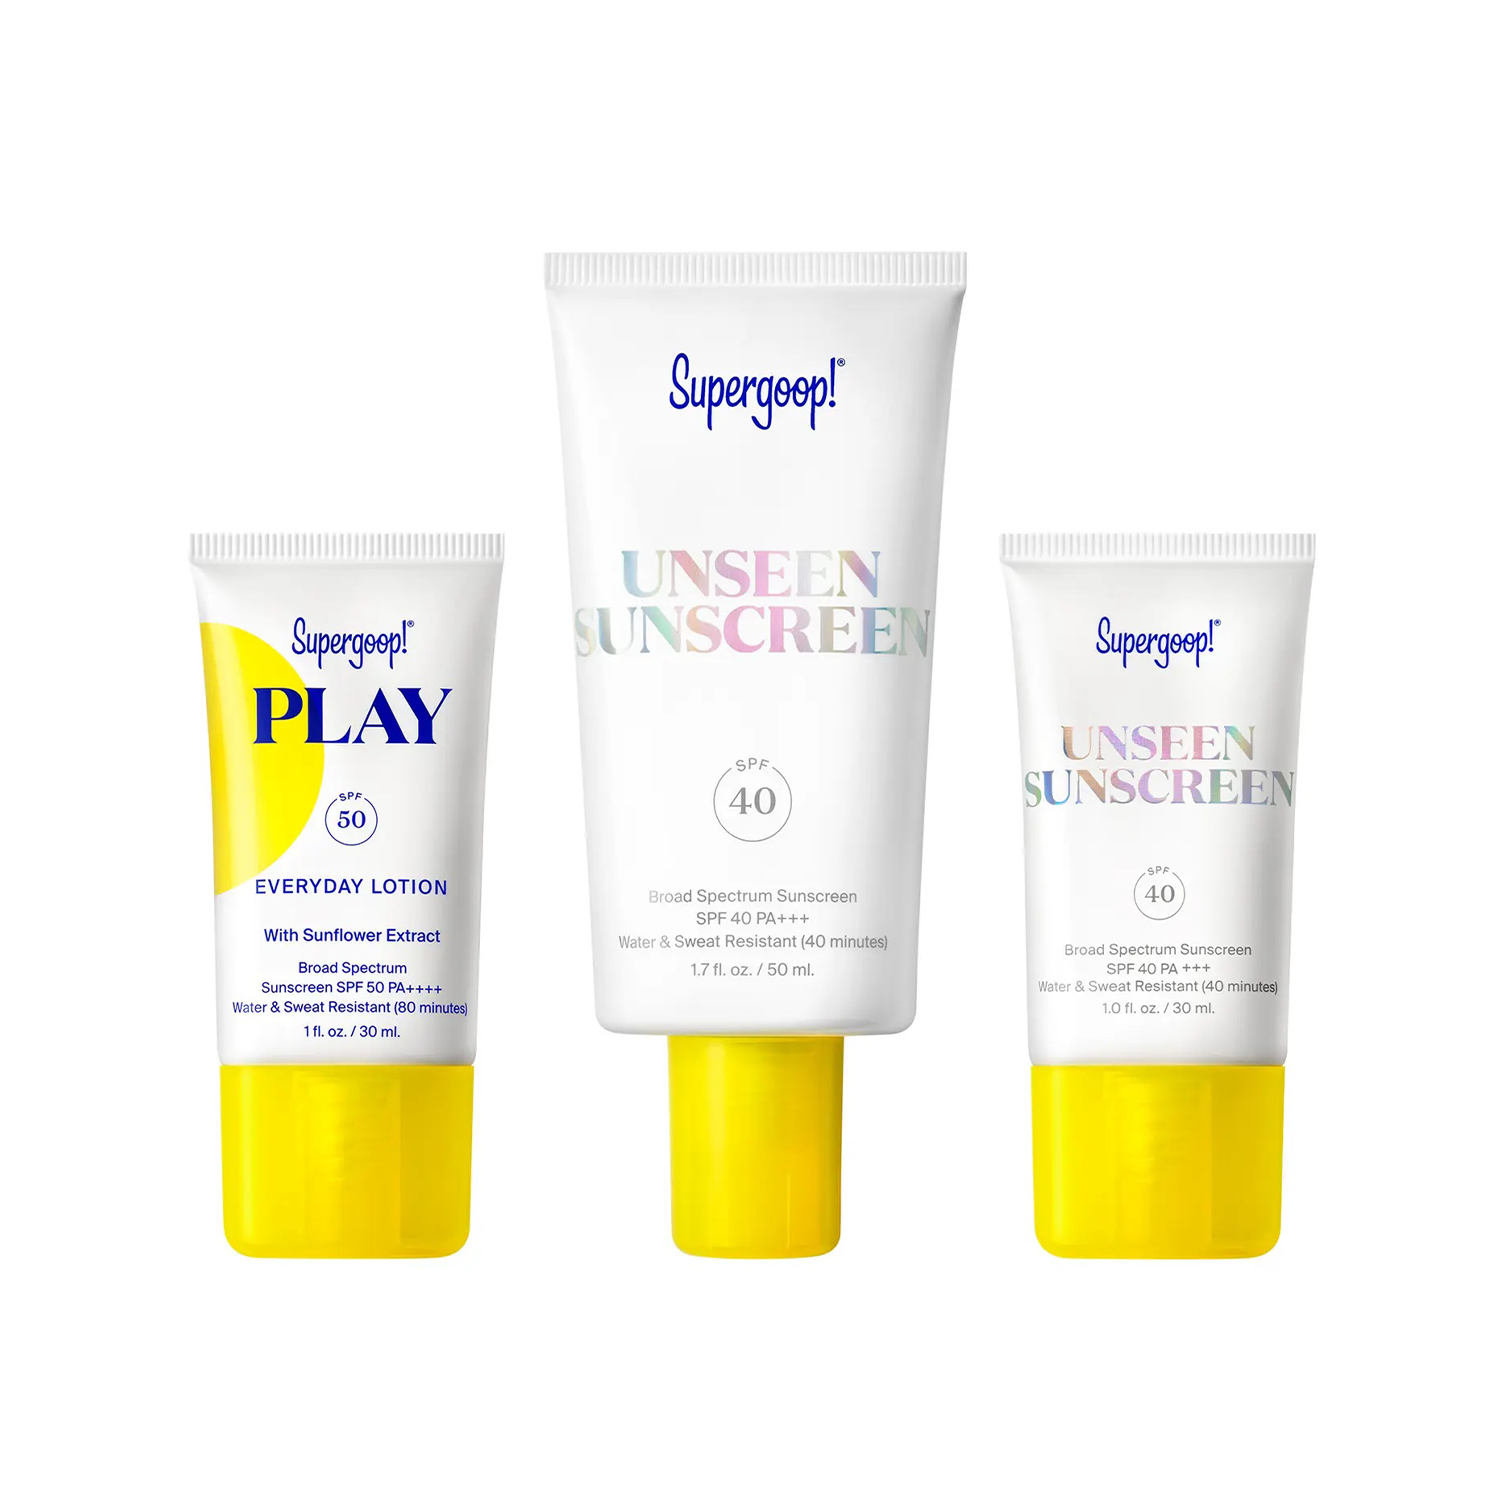 Supergoop trio of sunscreen